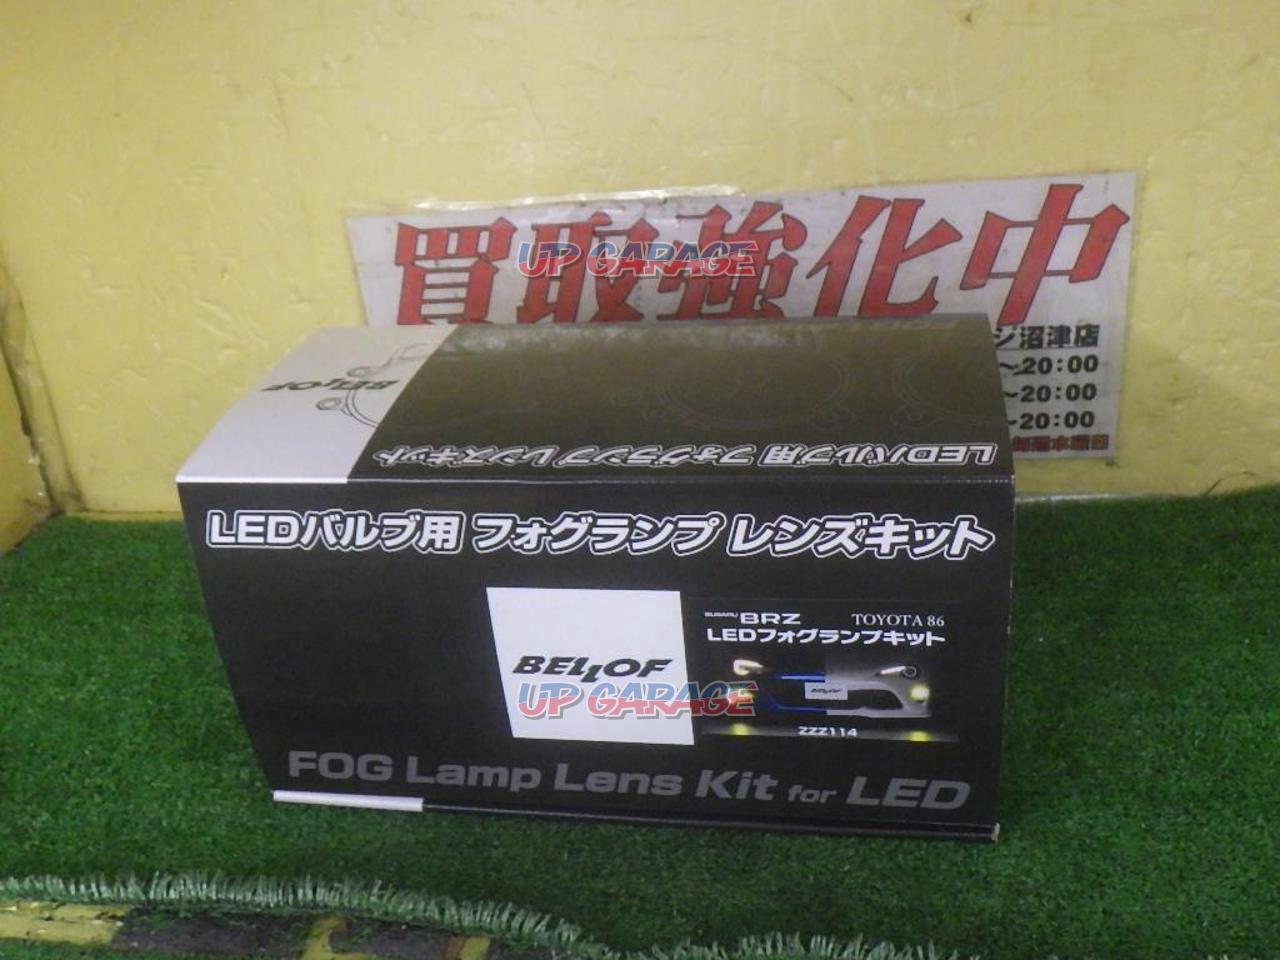 BELLOF For LED Bulbs Fog Lamp Lens Kit ZZZ114 | LED Bulbs | Croooober